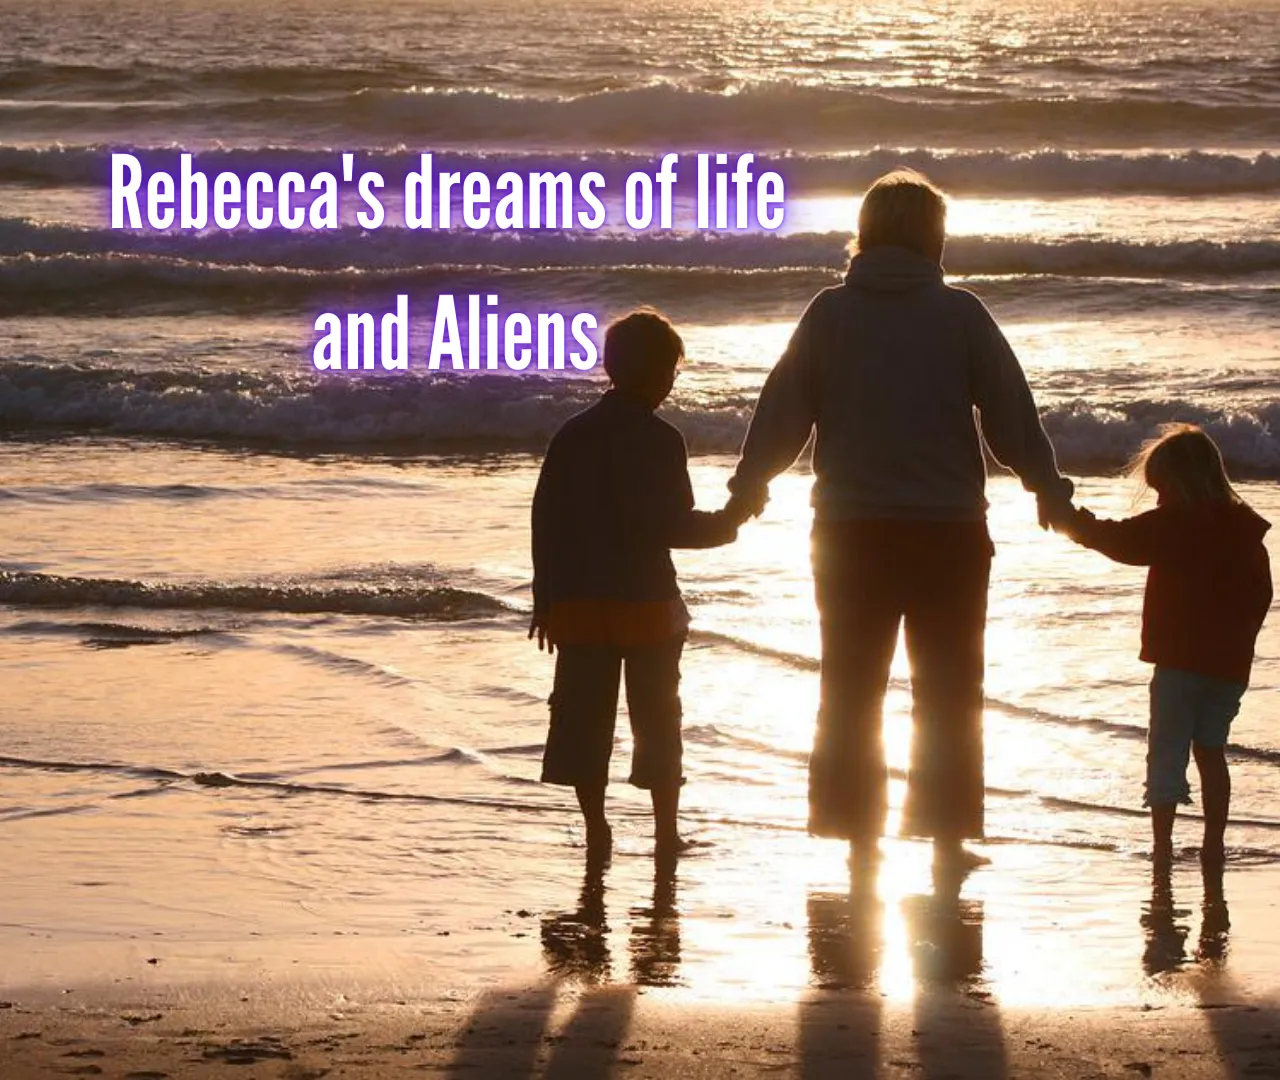 Rebecca's dream